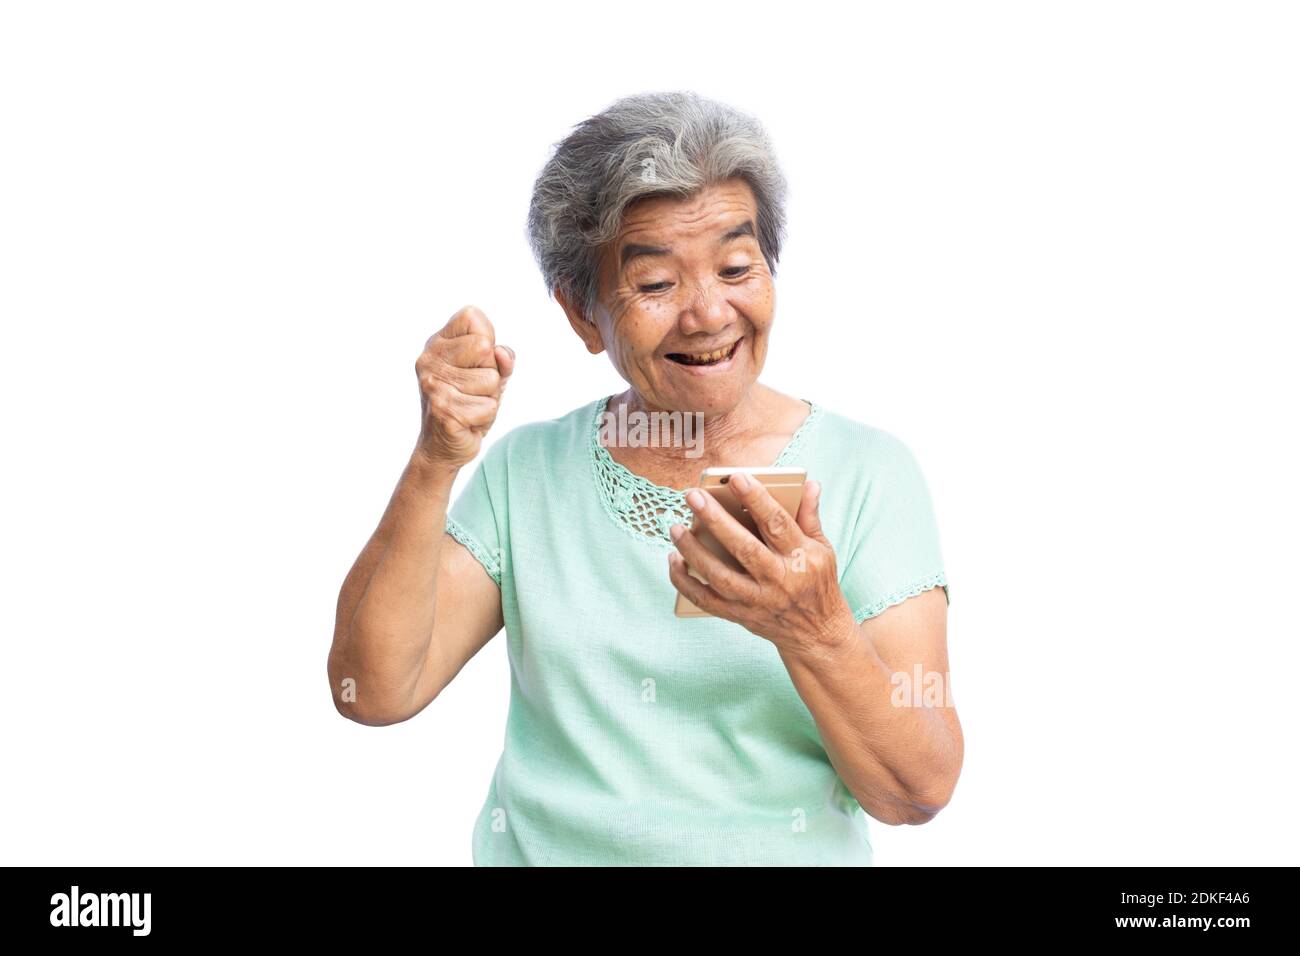 Smiling Senior Woman Taking Selfie Against White Background Stock Photo